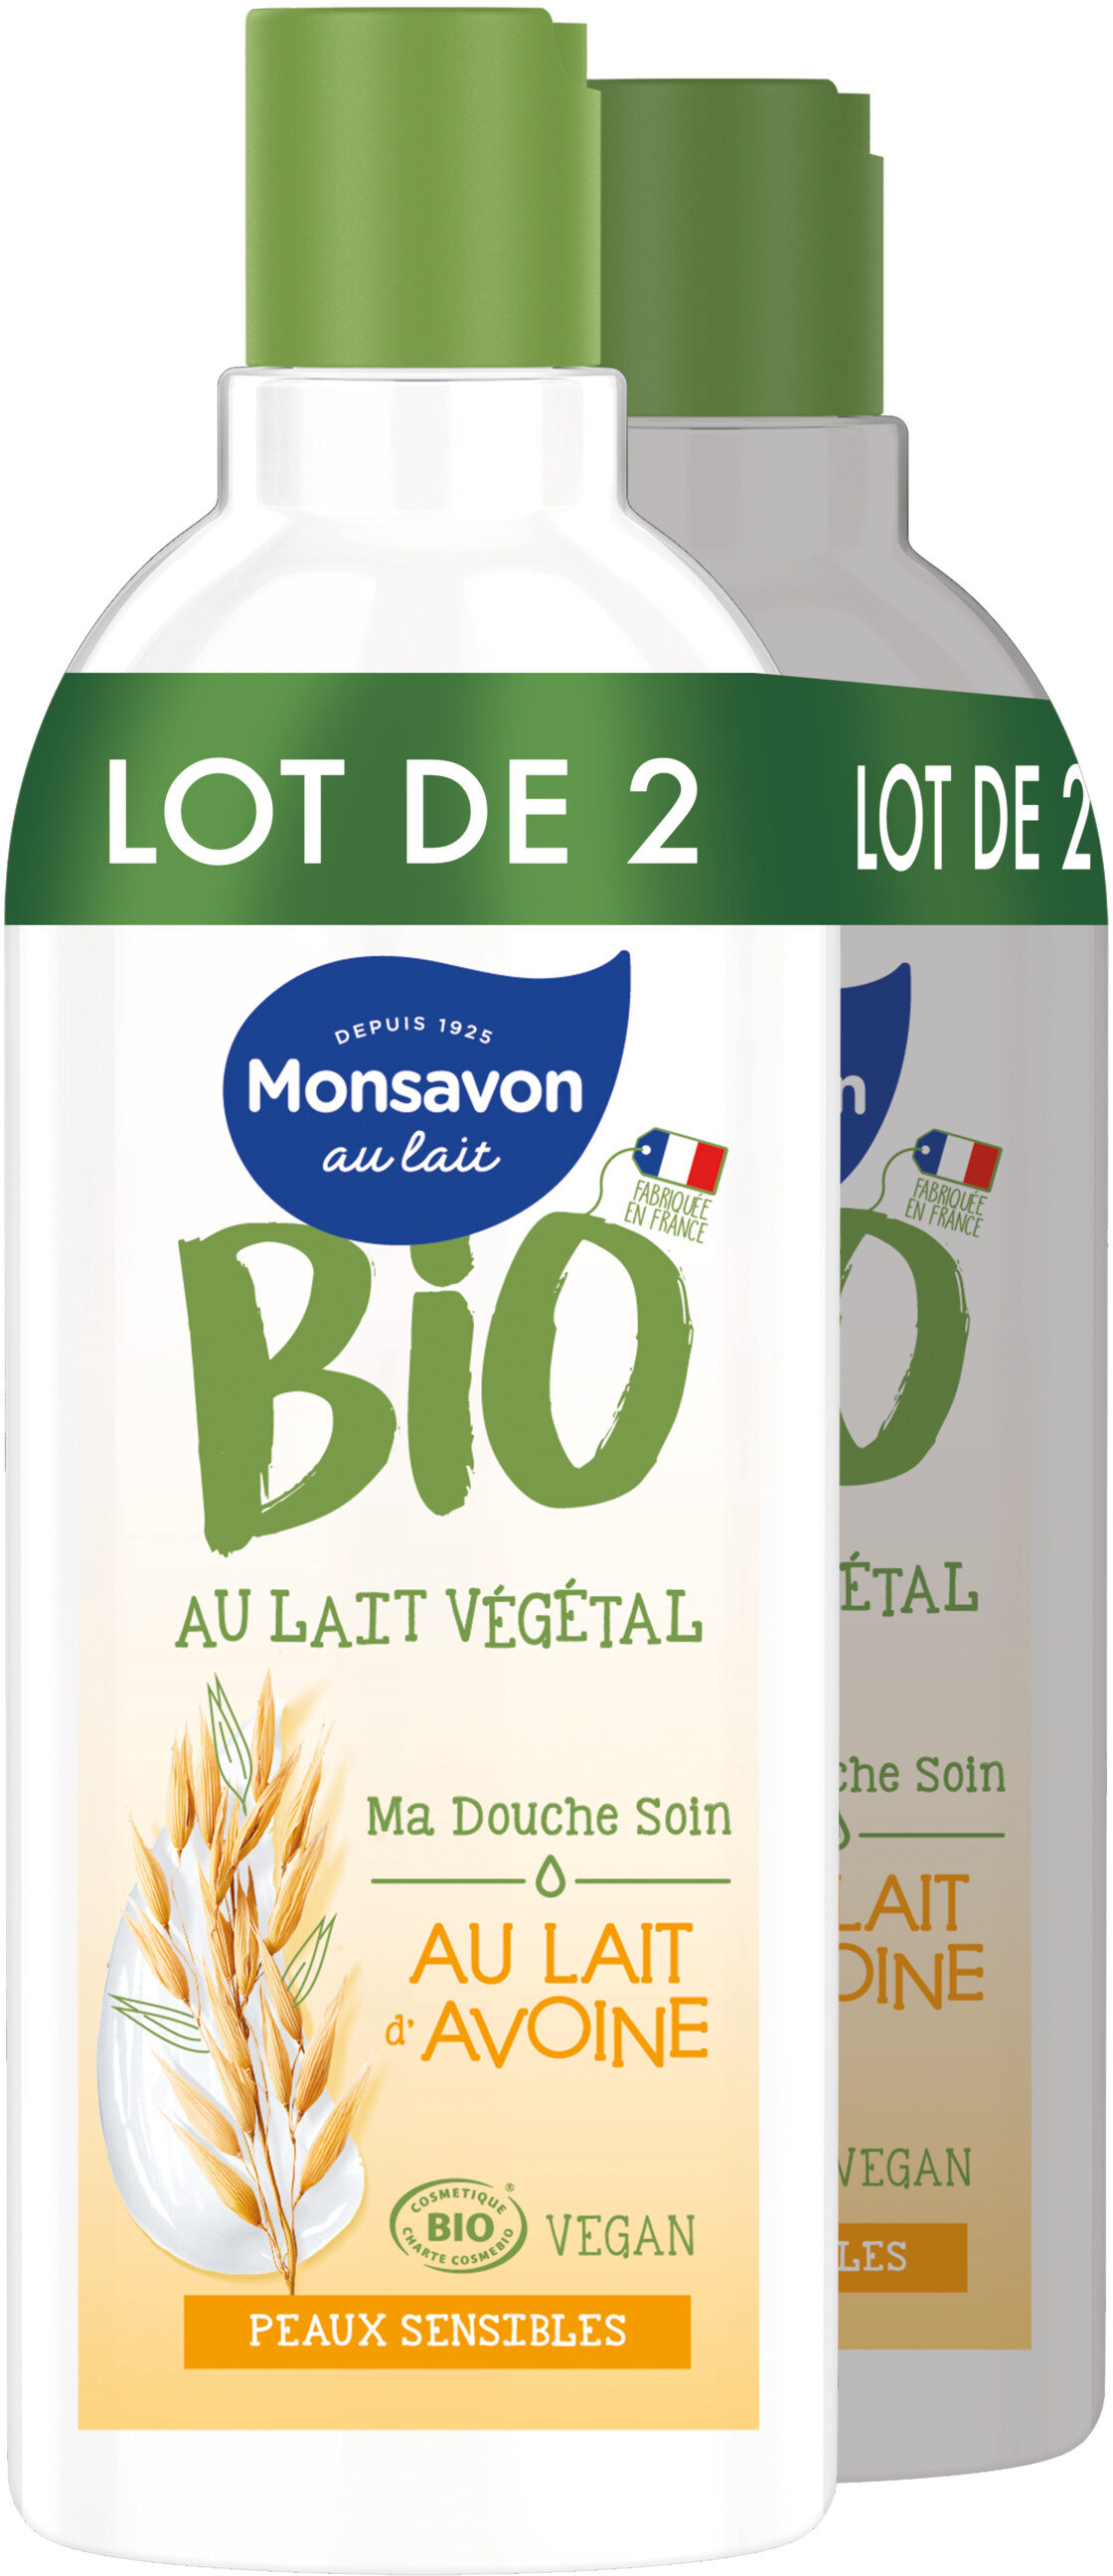 Monsavon Gel Douche Bio Vegan Lait Avoine Lot 2 x 300ml - Produit - fr